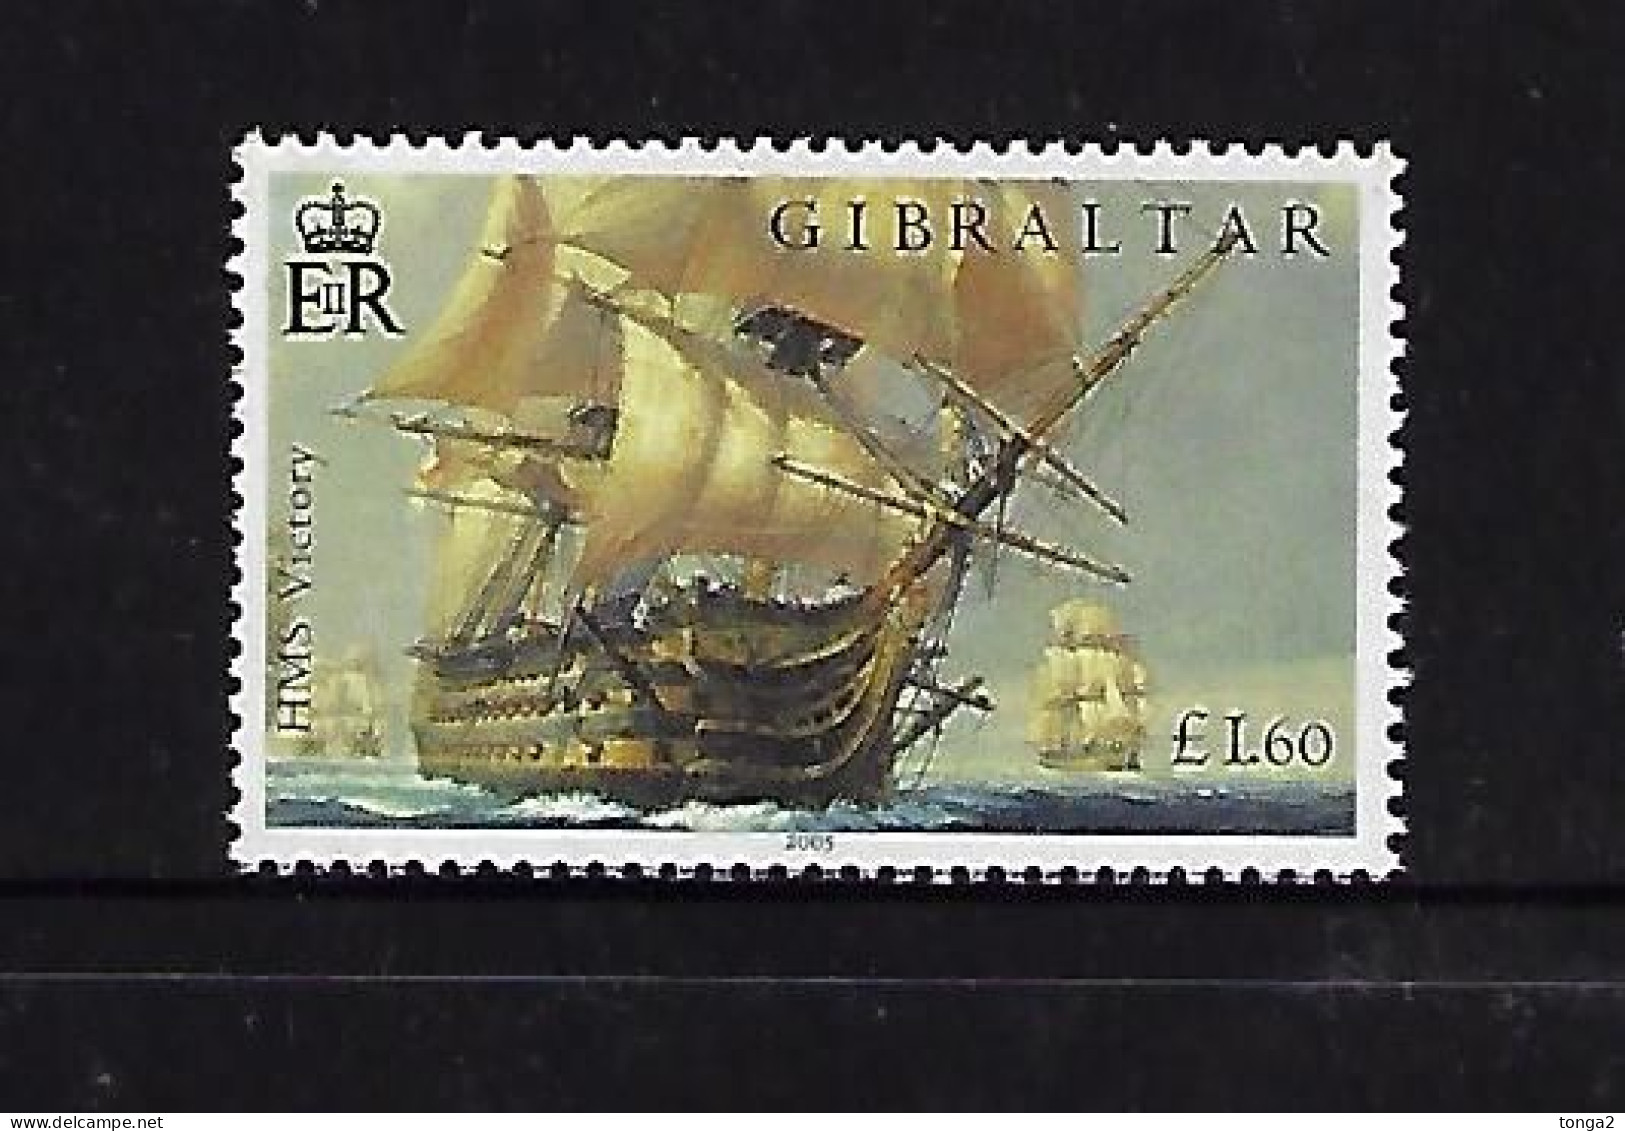 Gibraltar 2005 Trafalgar - Ship Stamp Has Wood Chips Attached - Unusual - Gibraltar